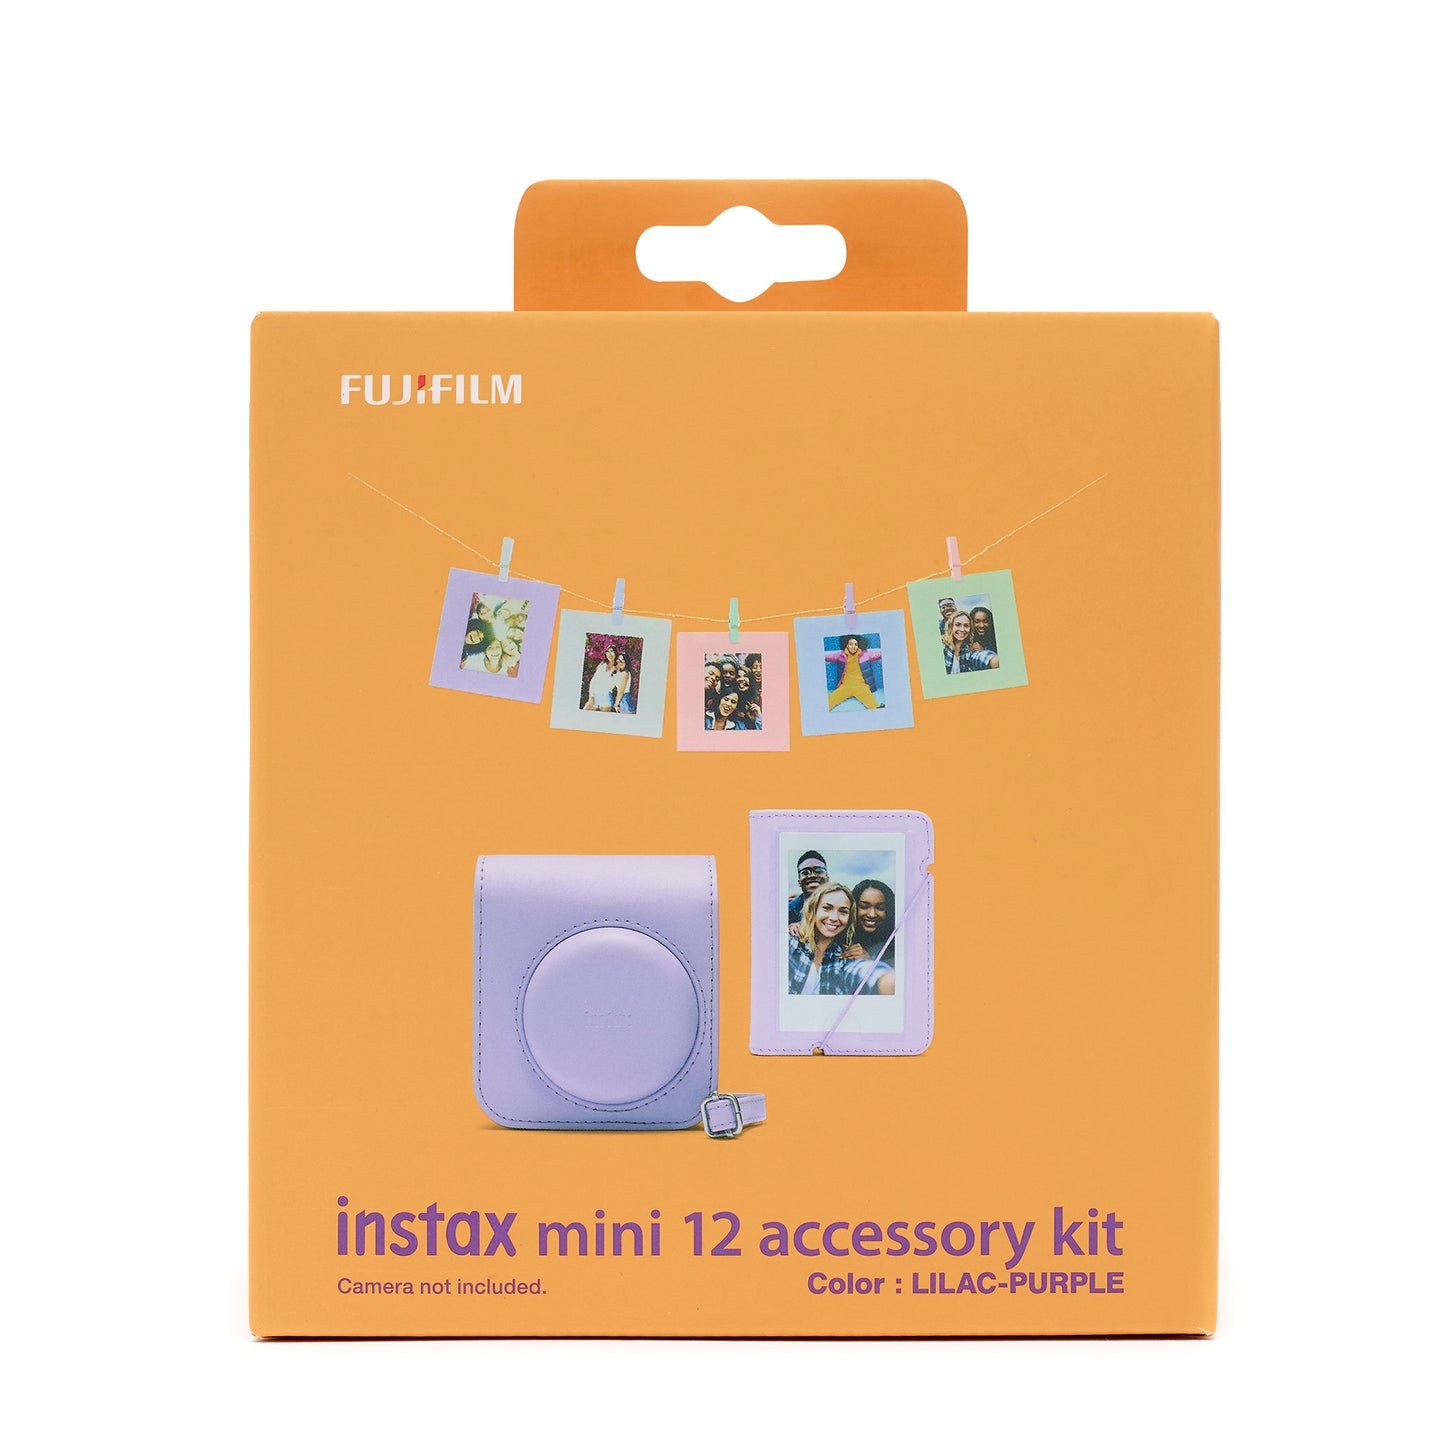 Fujifilm Instax Mini 12 Accessory Kit with Case, Photo Album, Hanging Cards & Pegs - maplin.co.uk